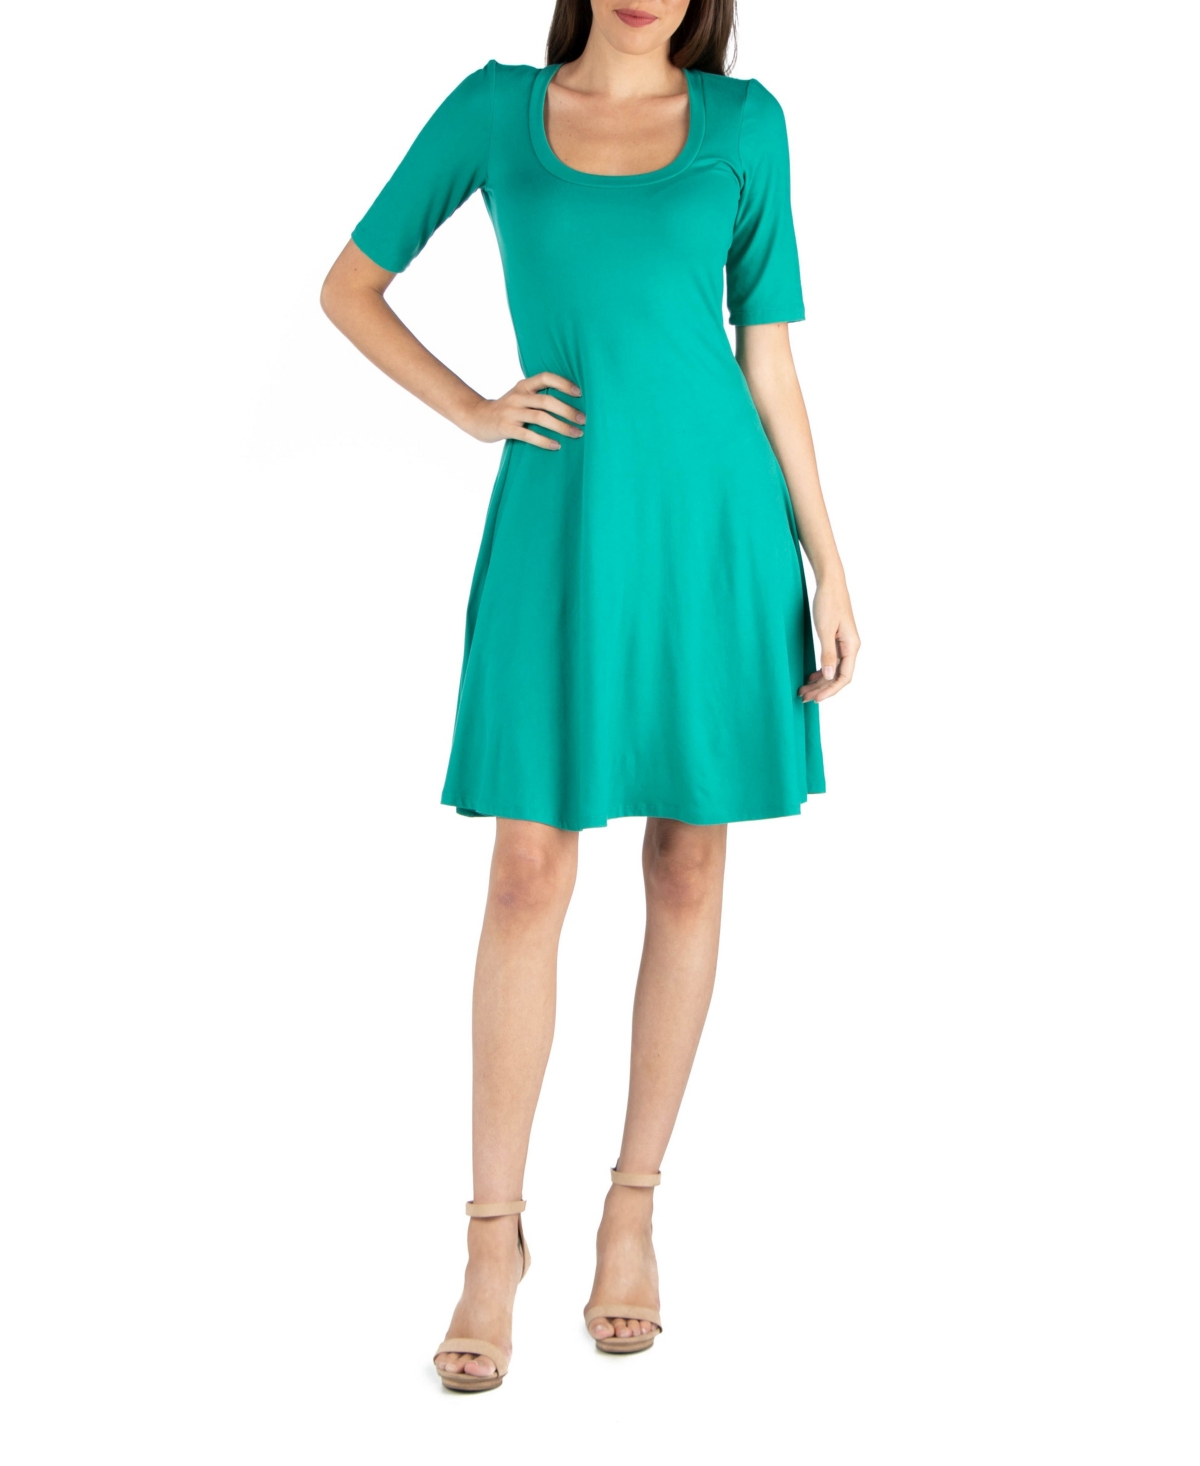 A-Line Knee Length Dress with Elbow Length Sleeves - Jade